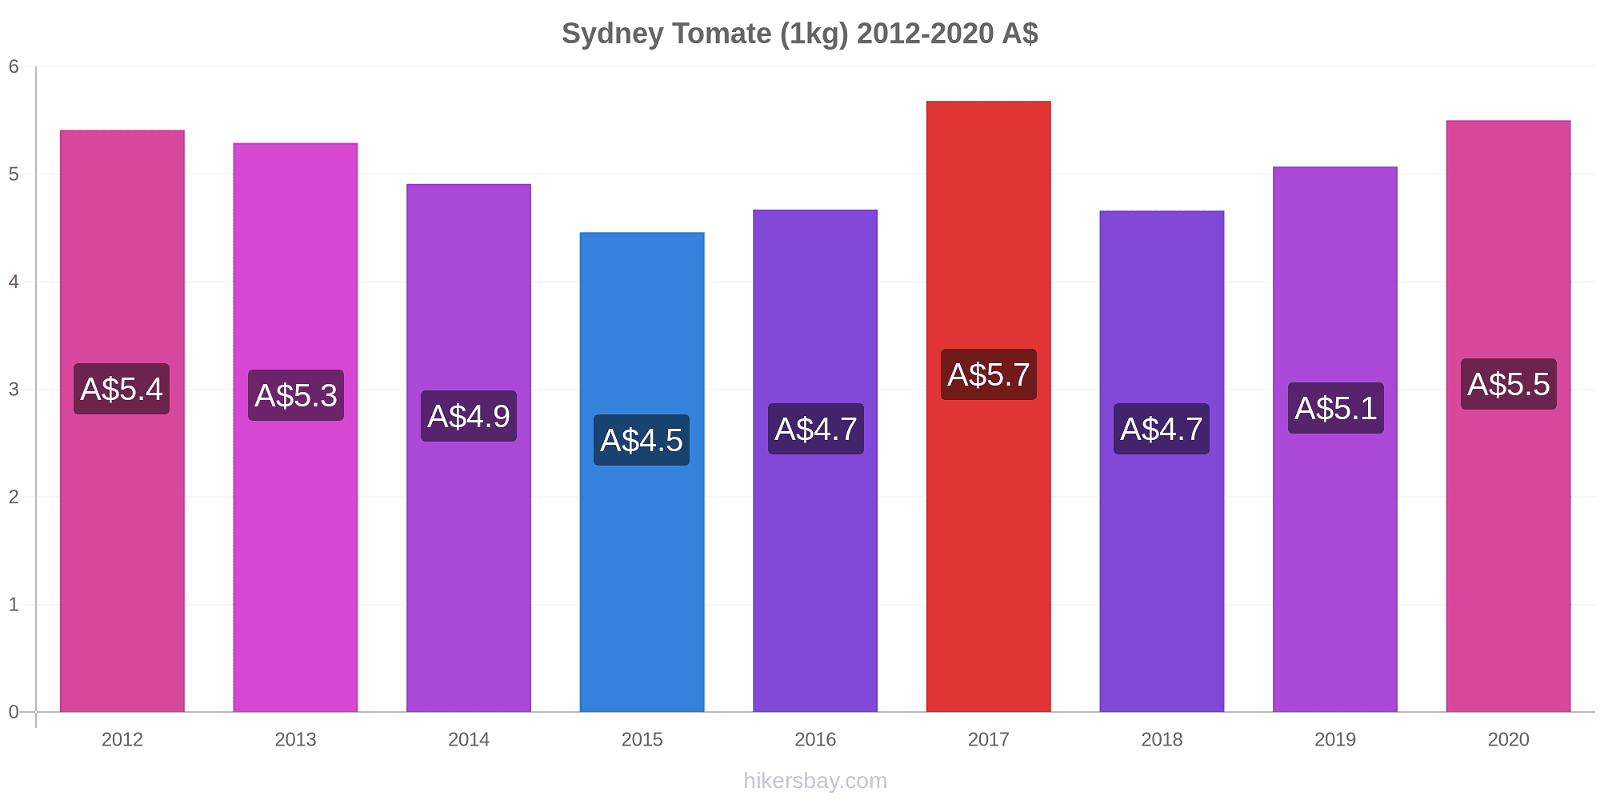 Sydney changements de prix Tomate (1kg) hikersbay.com